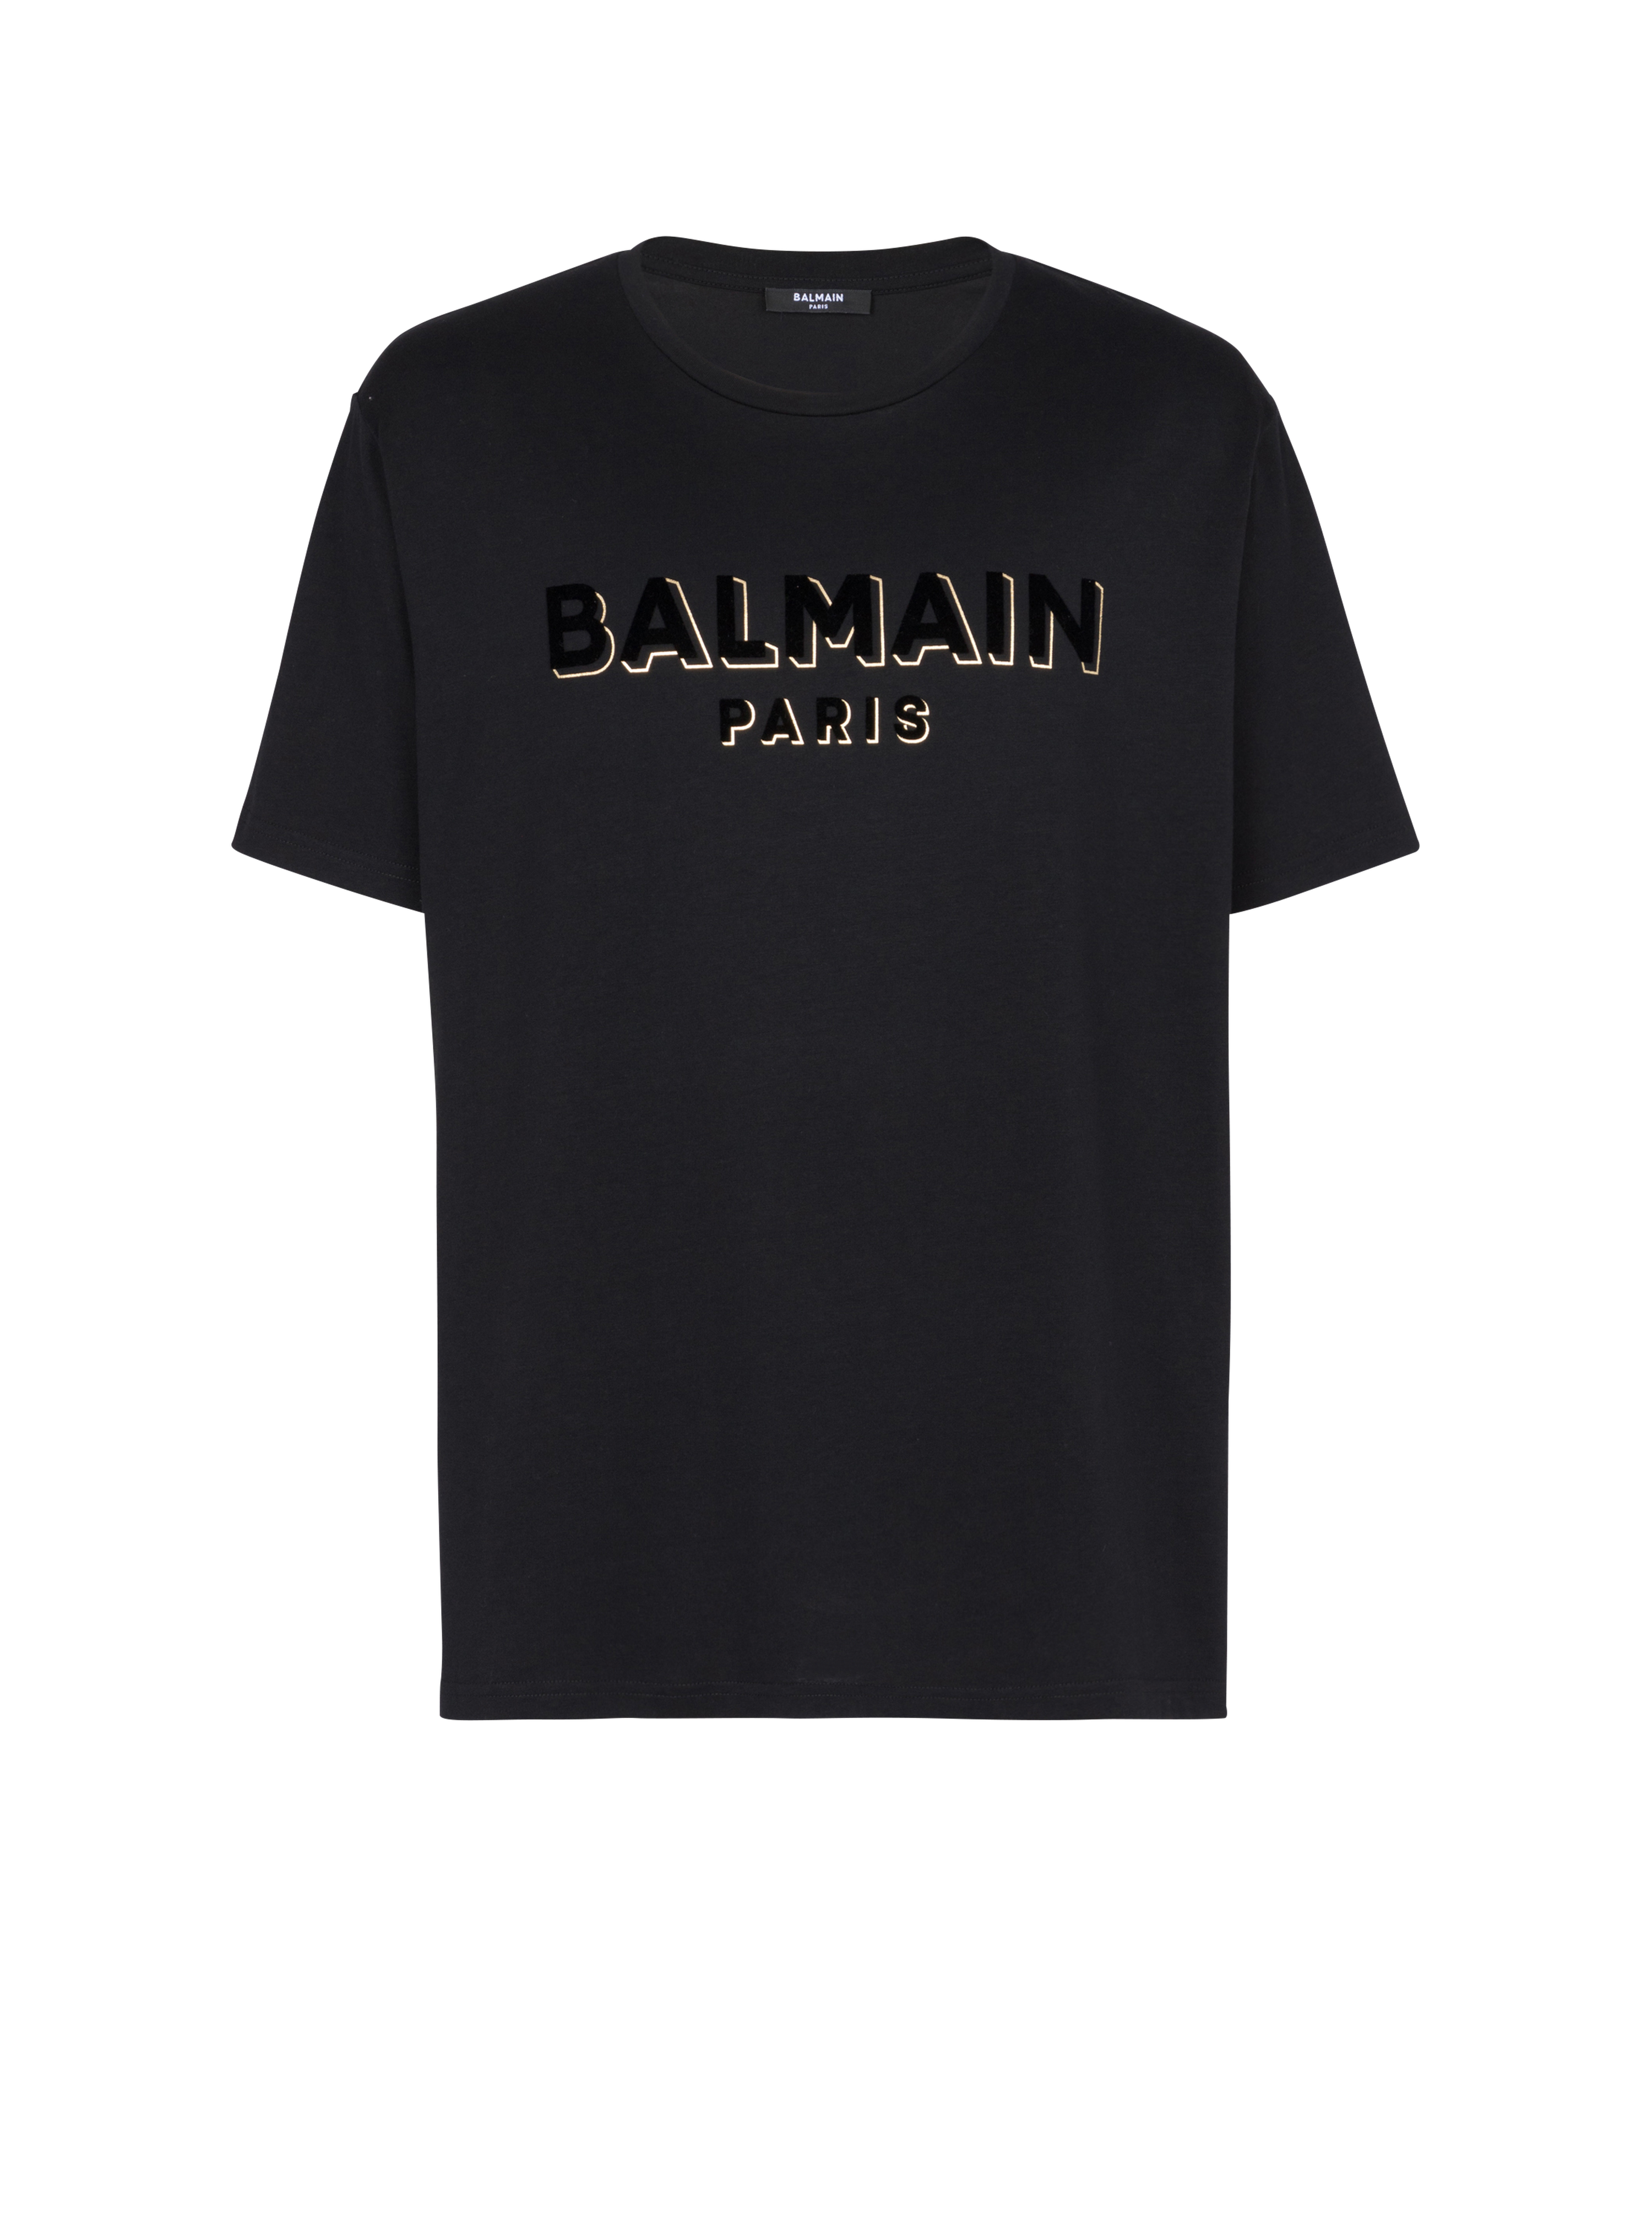 Cotton T-shirt with textured Balmain logo, black